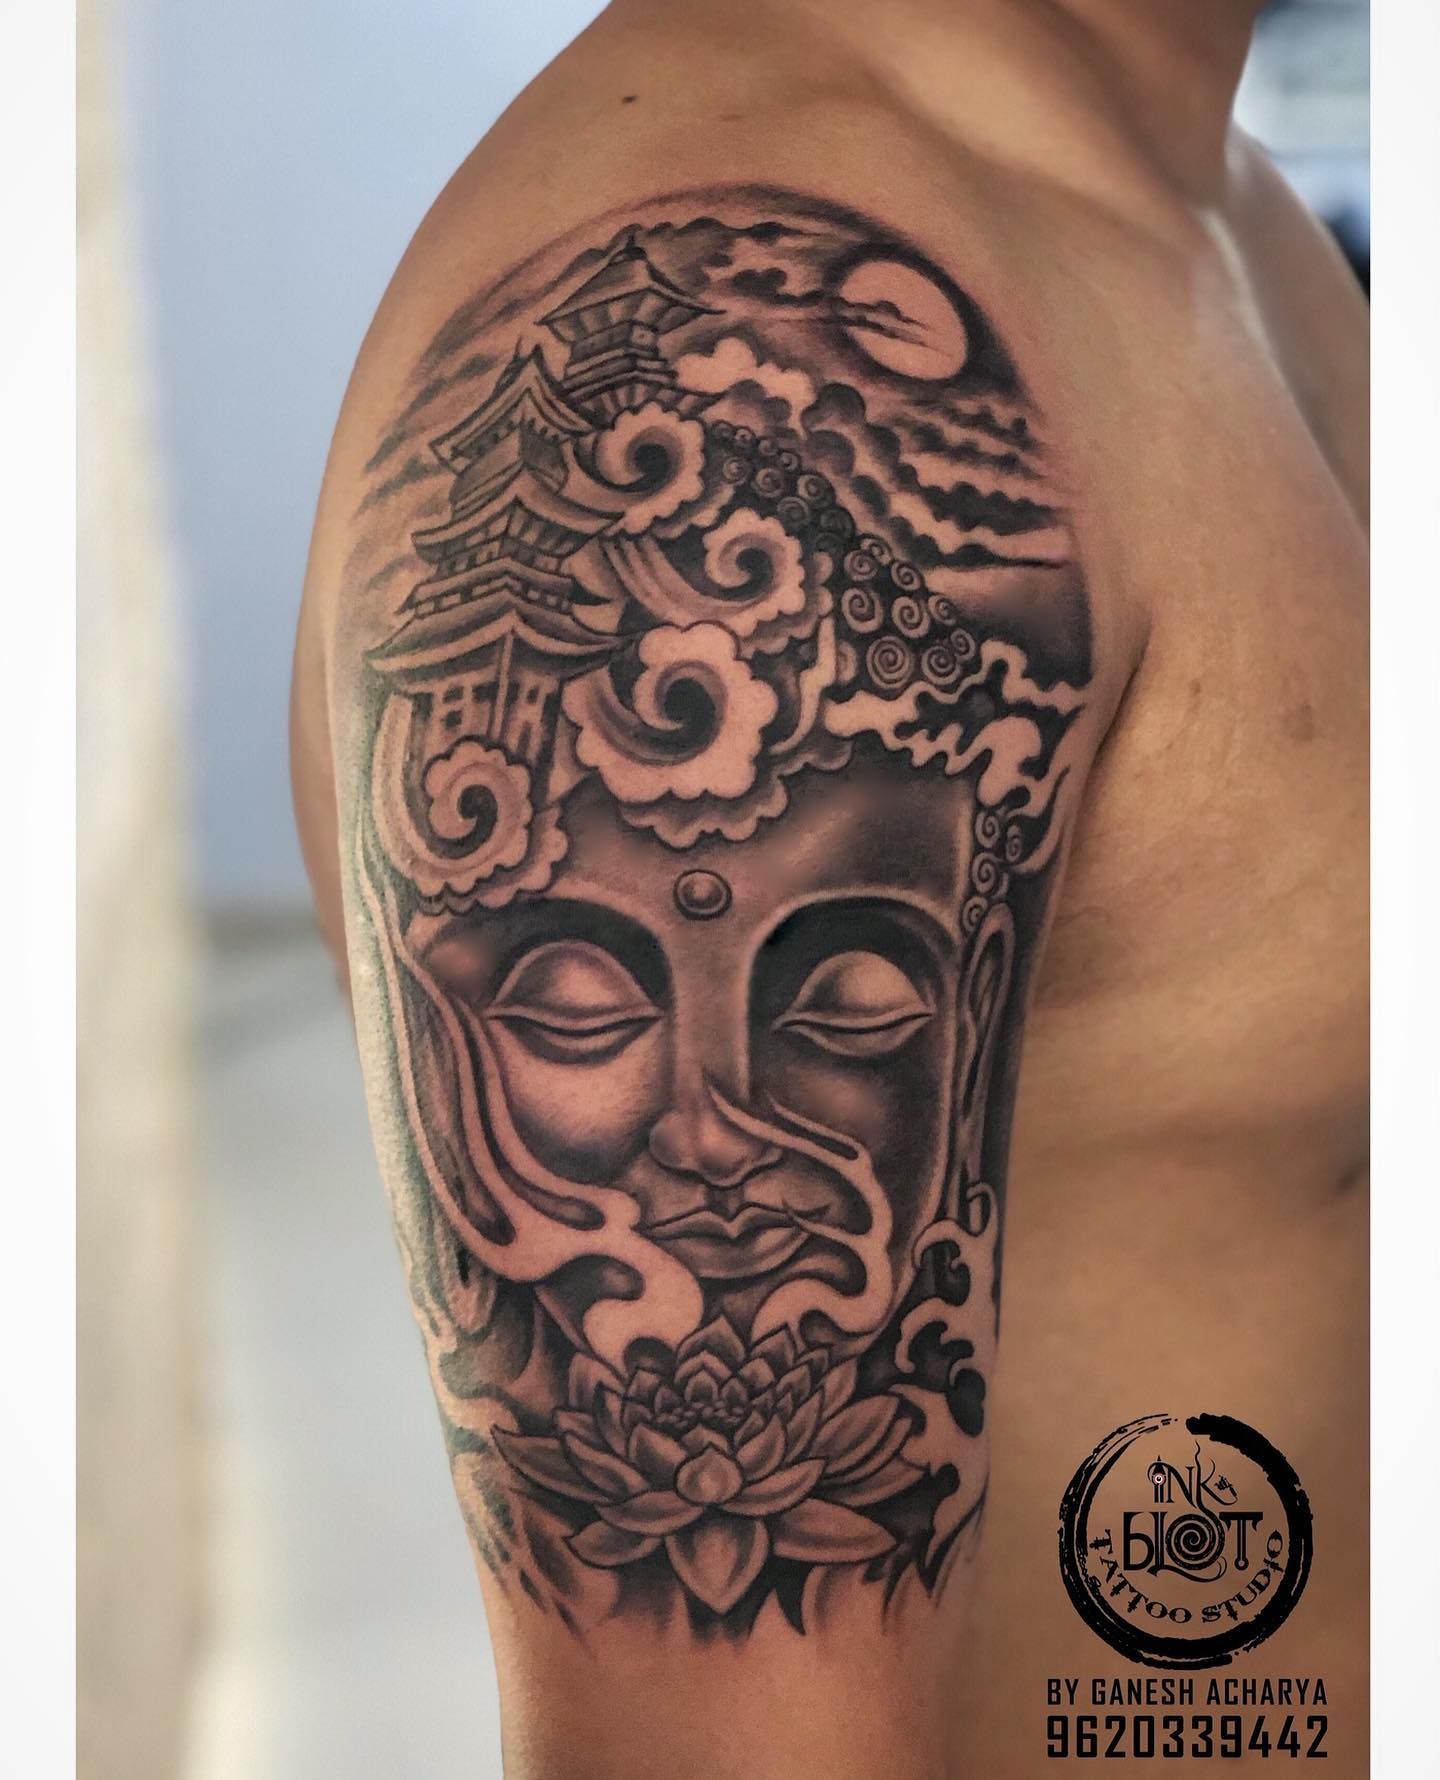 POPSUGAR | Buddha tattoos, Buddha tattoo design, Hand tattoos for guys